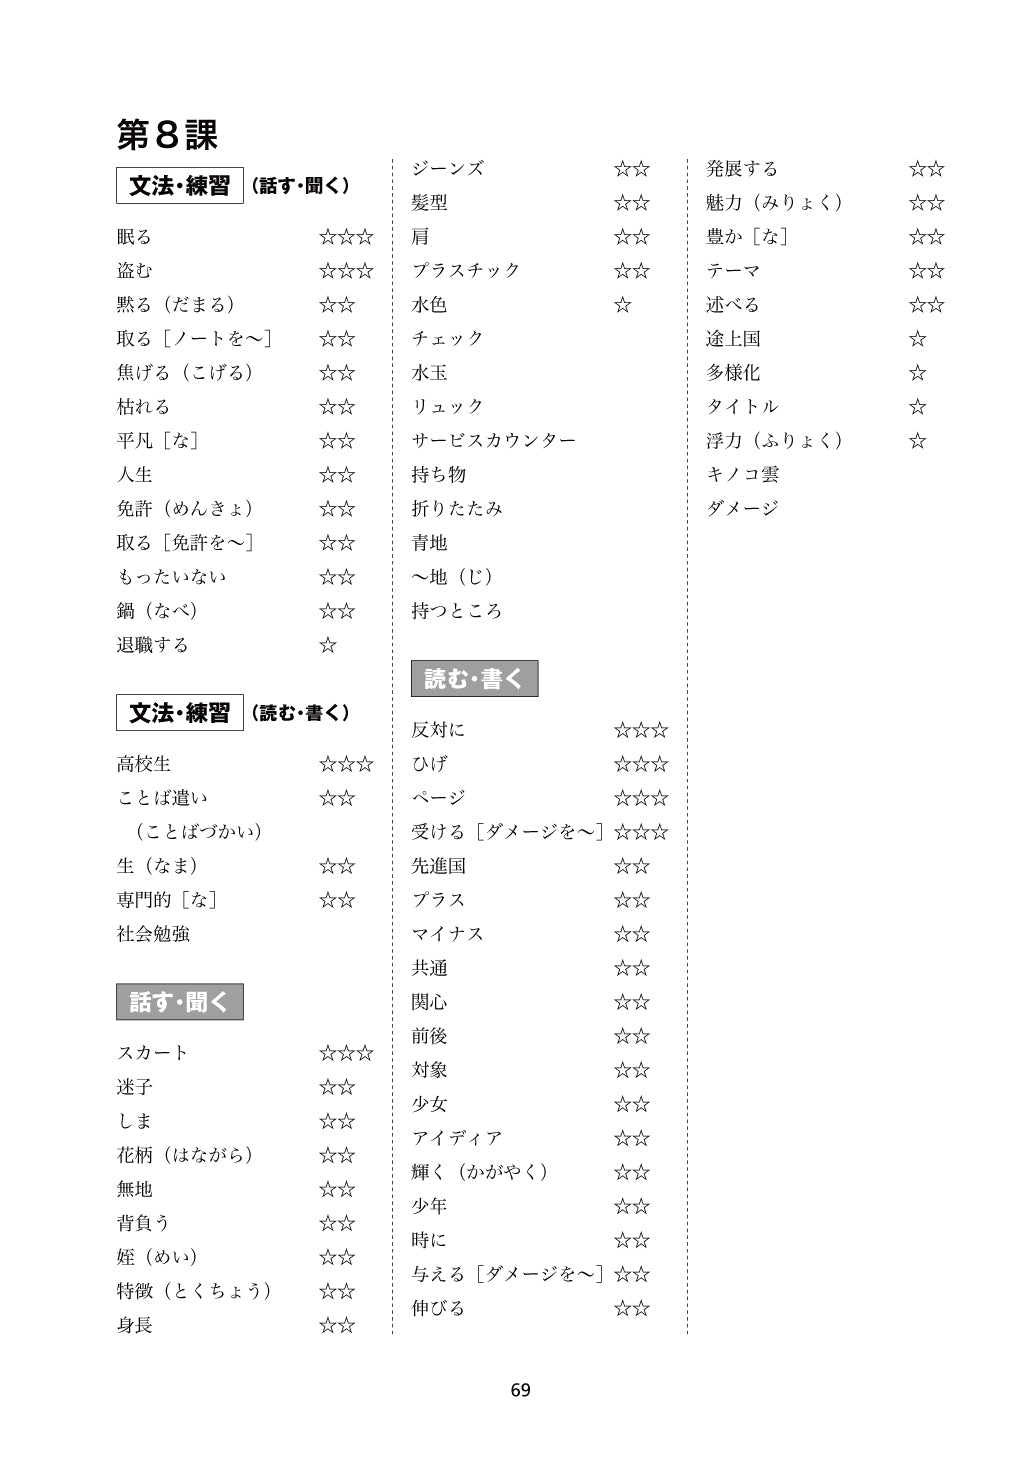 minna no nihongo 1 vocabulary pdf